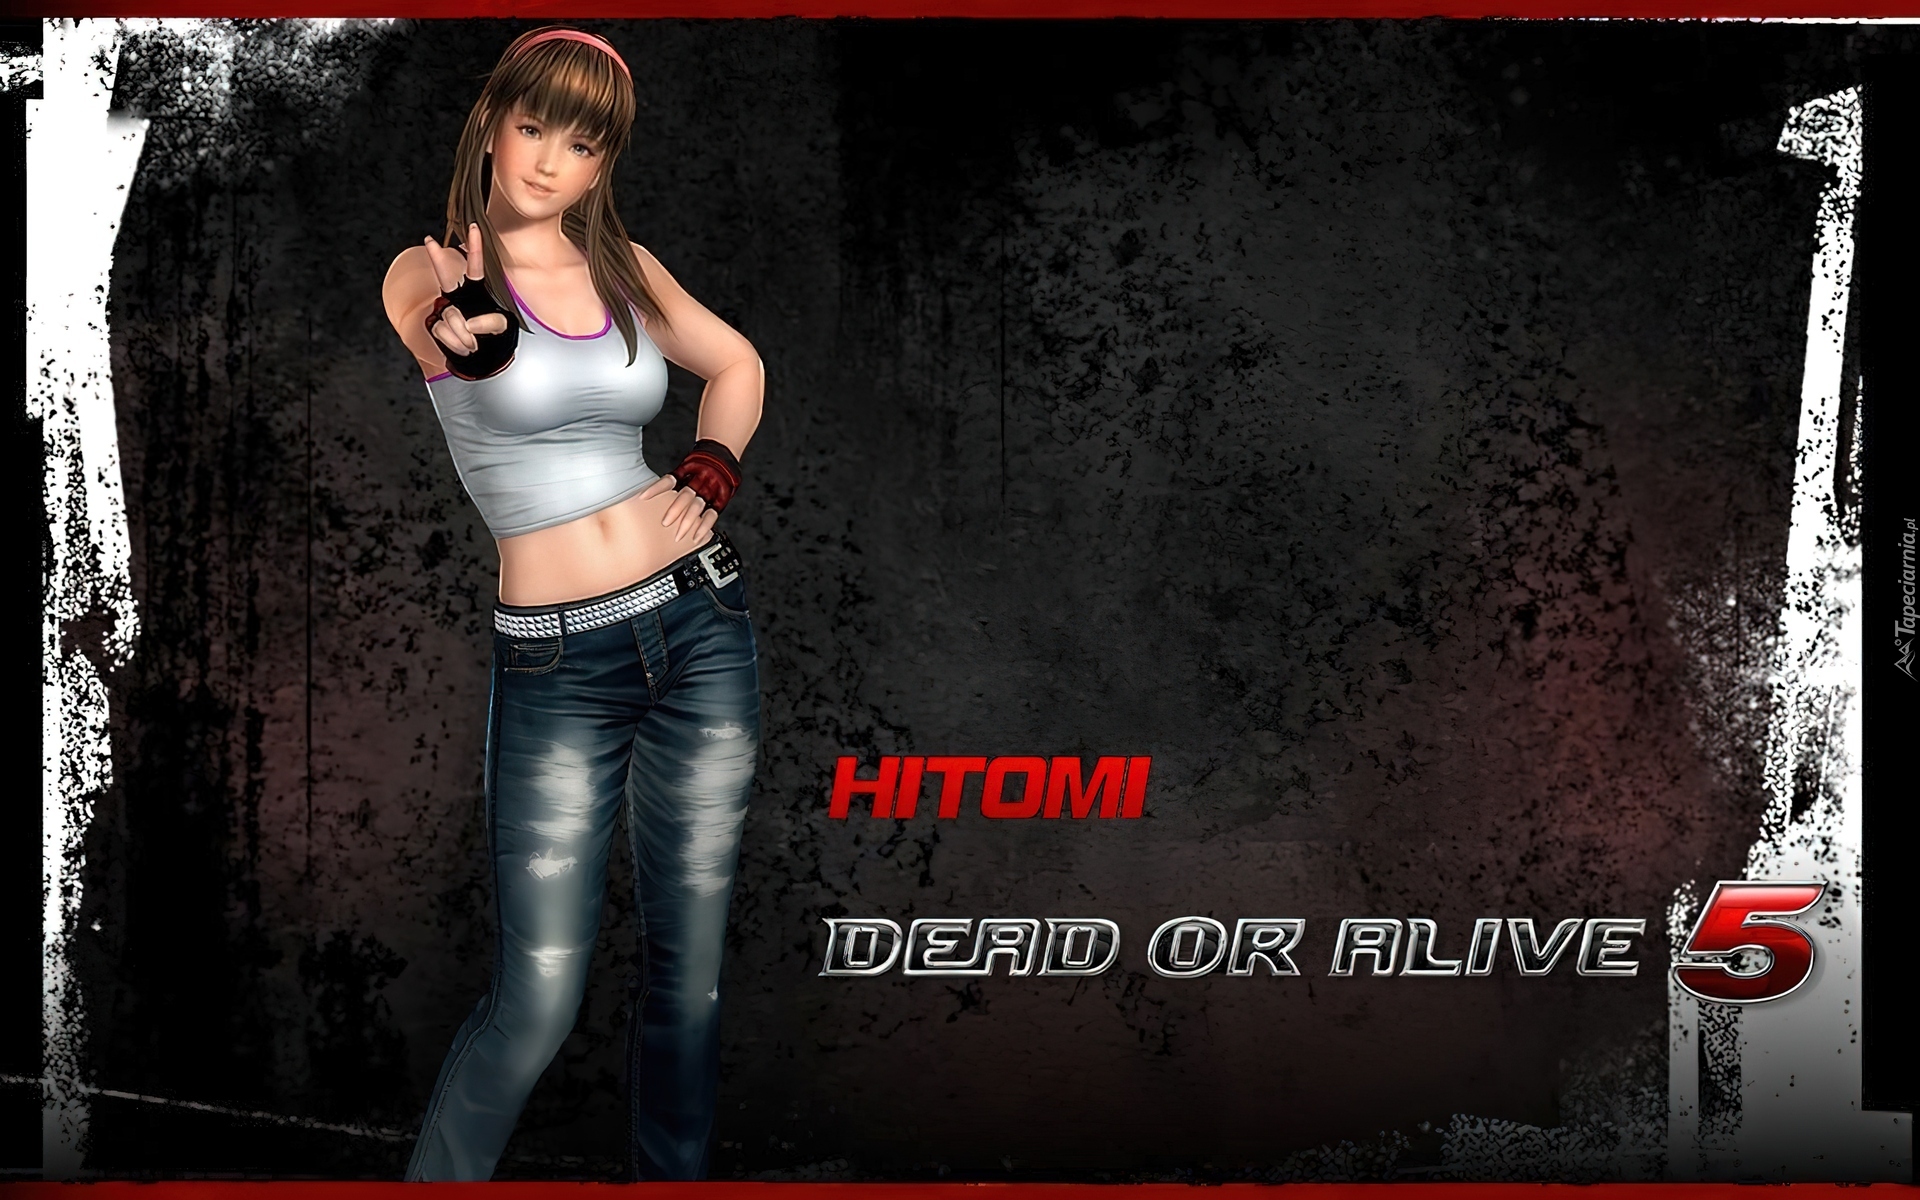 Dead Or Alive 5, Hitomi